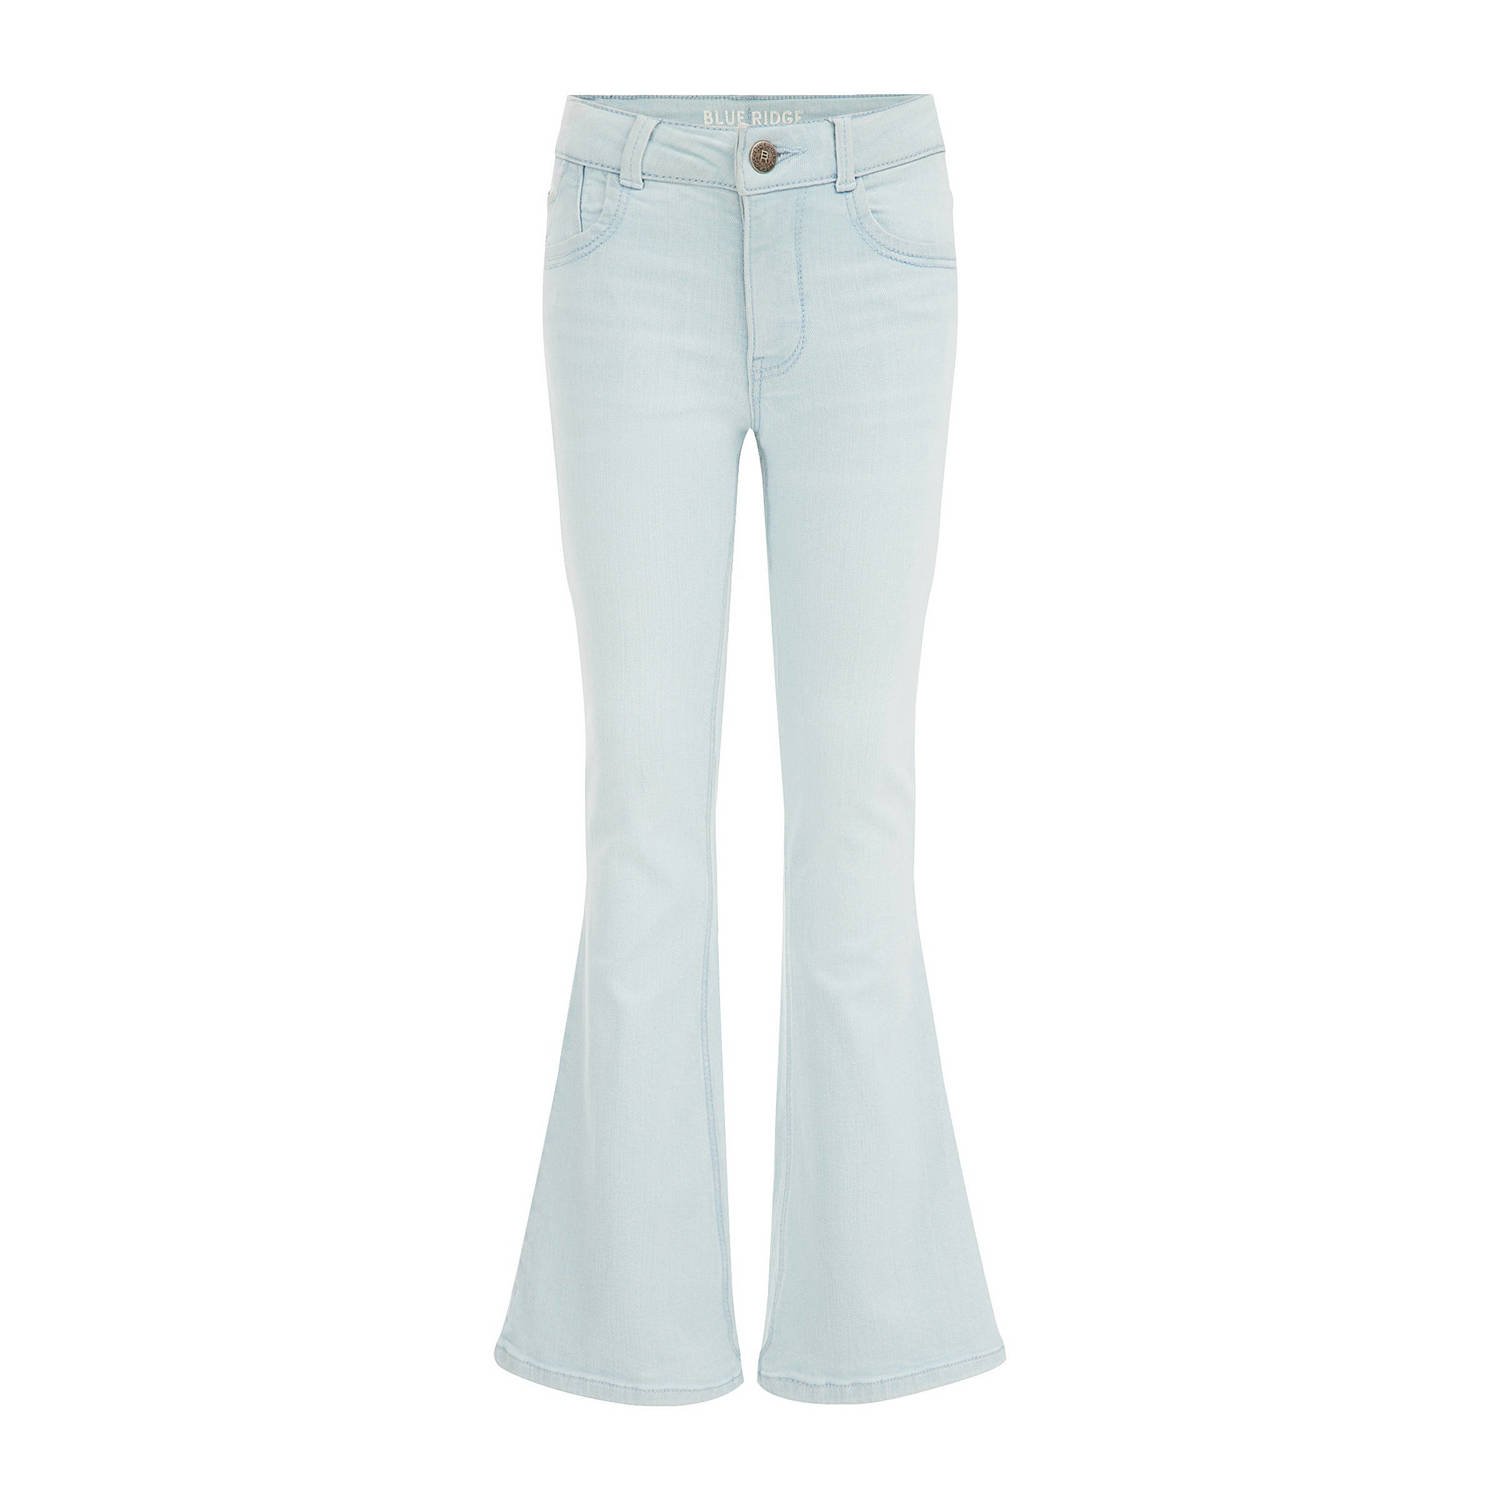 WE Fashion Blue Ridge flared jeans stone denim Broek Blauw Meisjes Stretchdenim 122